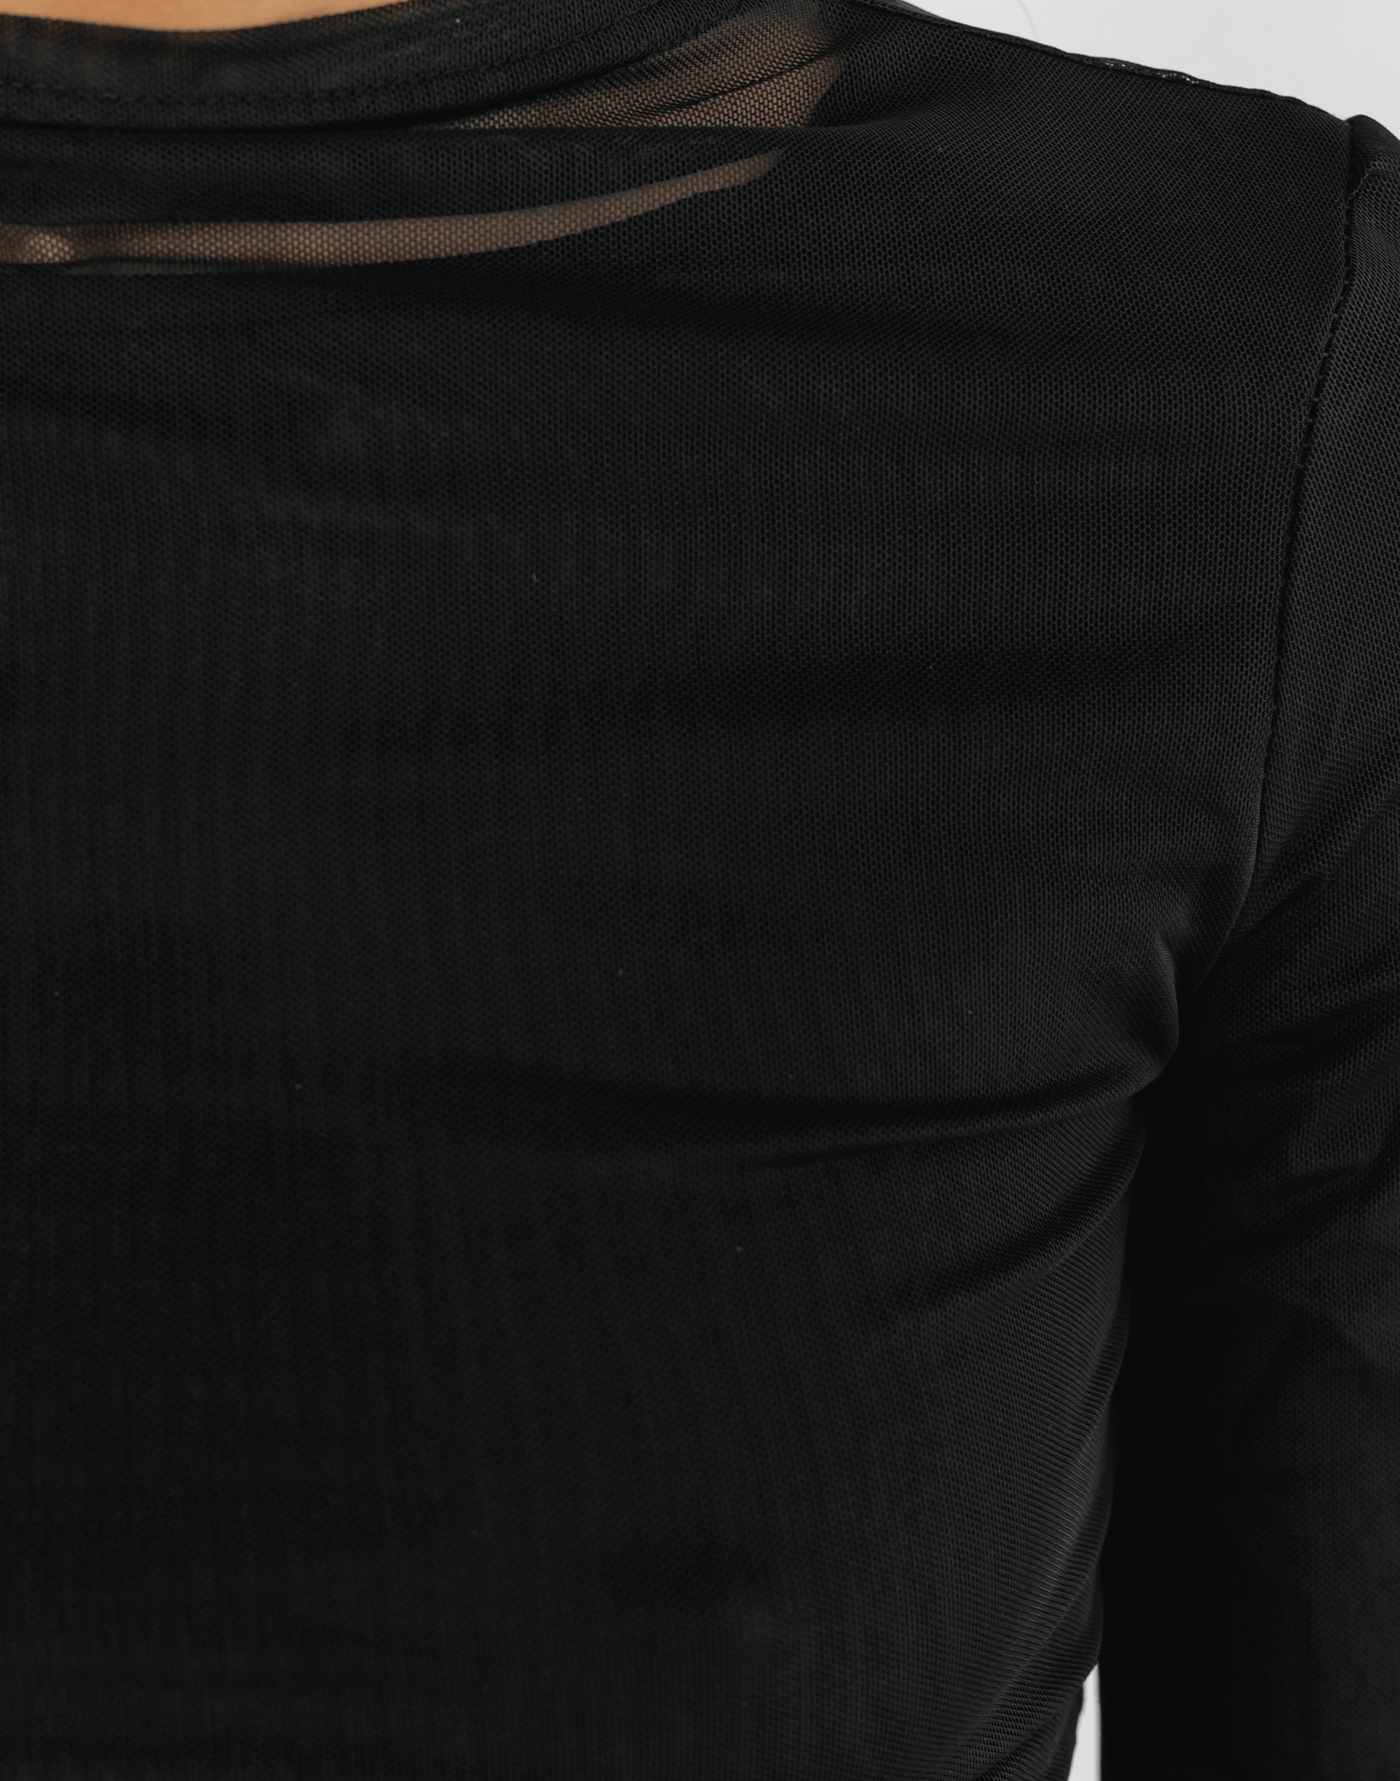 On The Scene Mesh Long Sleeve (Black) - Mesh Long Sleeve Crop Top - Women's Top - Charcoal Clothing